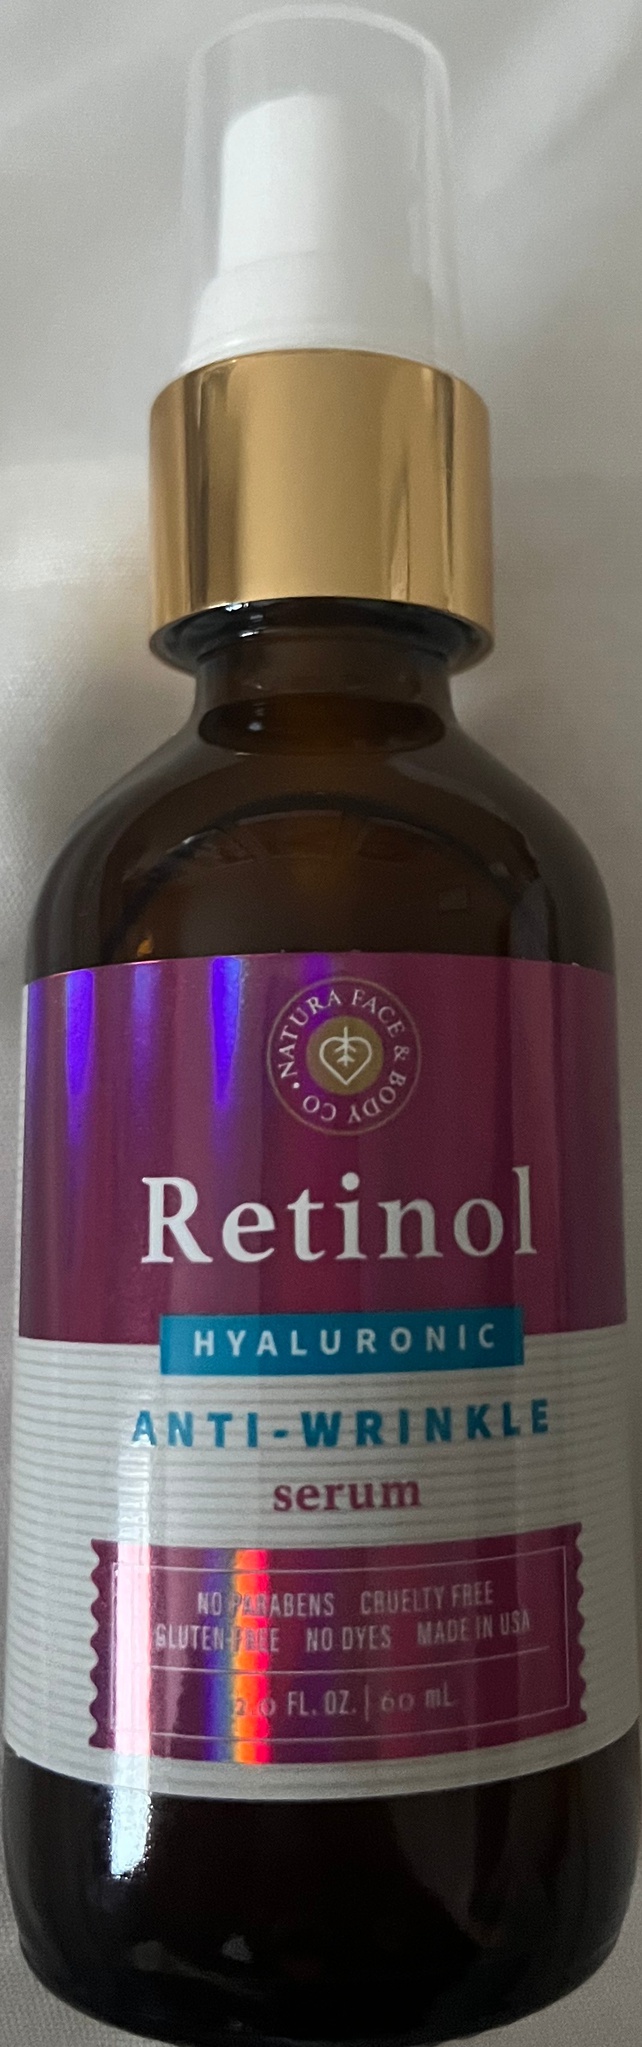 Nature Face & Body Co. Retinol Hyaluronic Anti Wrinkle Serum